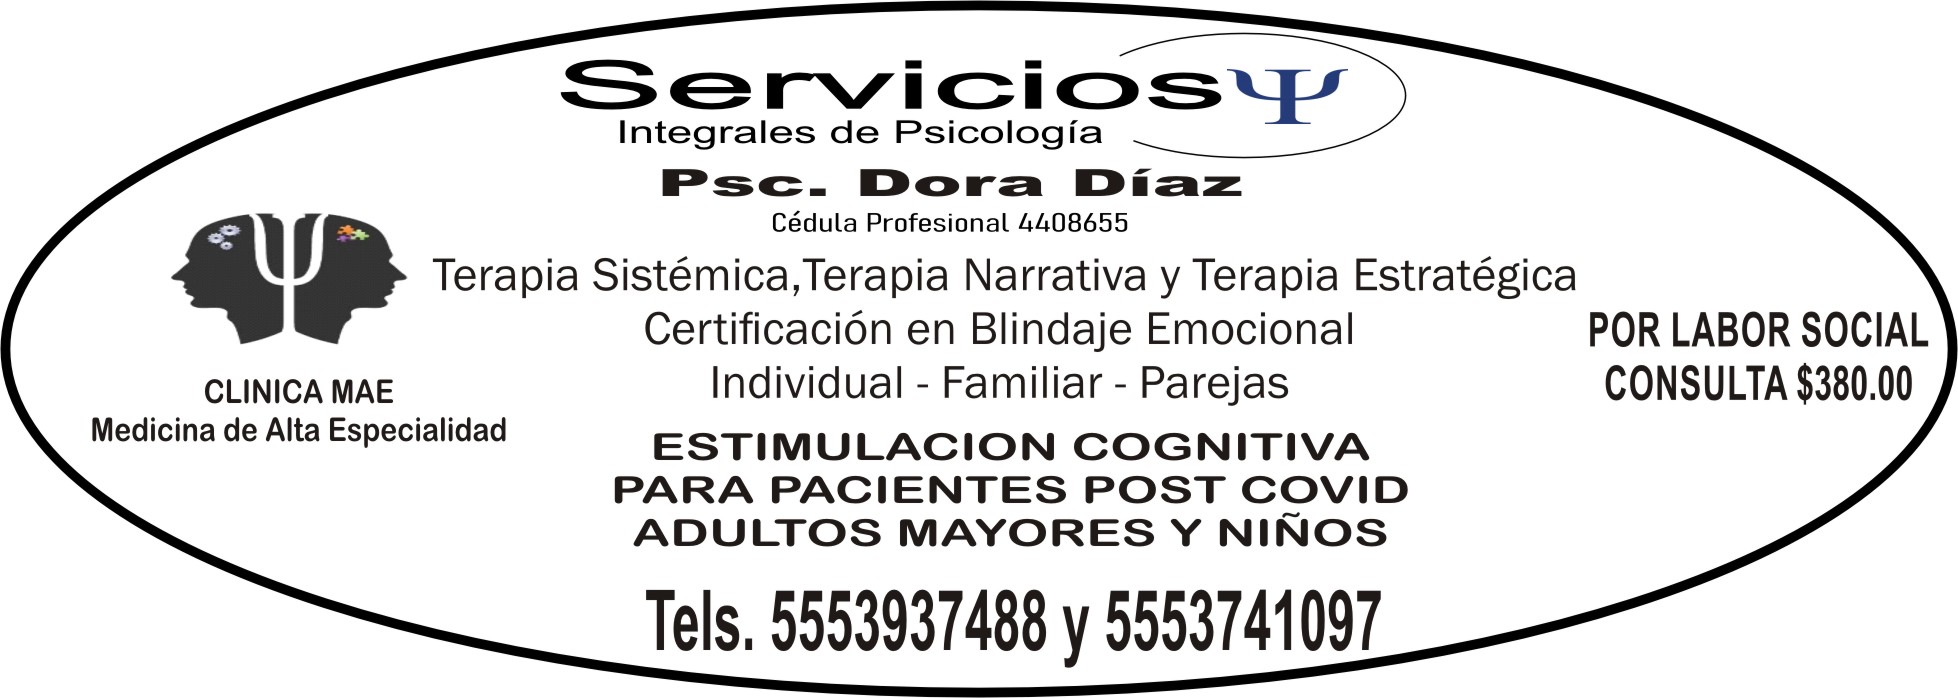 SERVICIOS

INTEGRALES&NBSP;DE&NBSP;PSICOLOGIA

PSC. DORA DIAZ

5553937488
